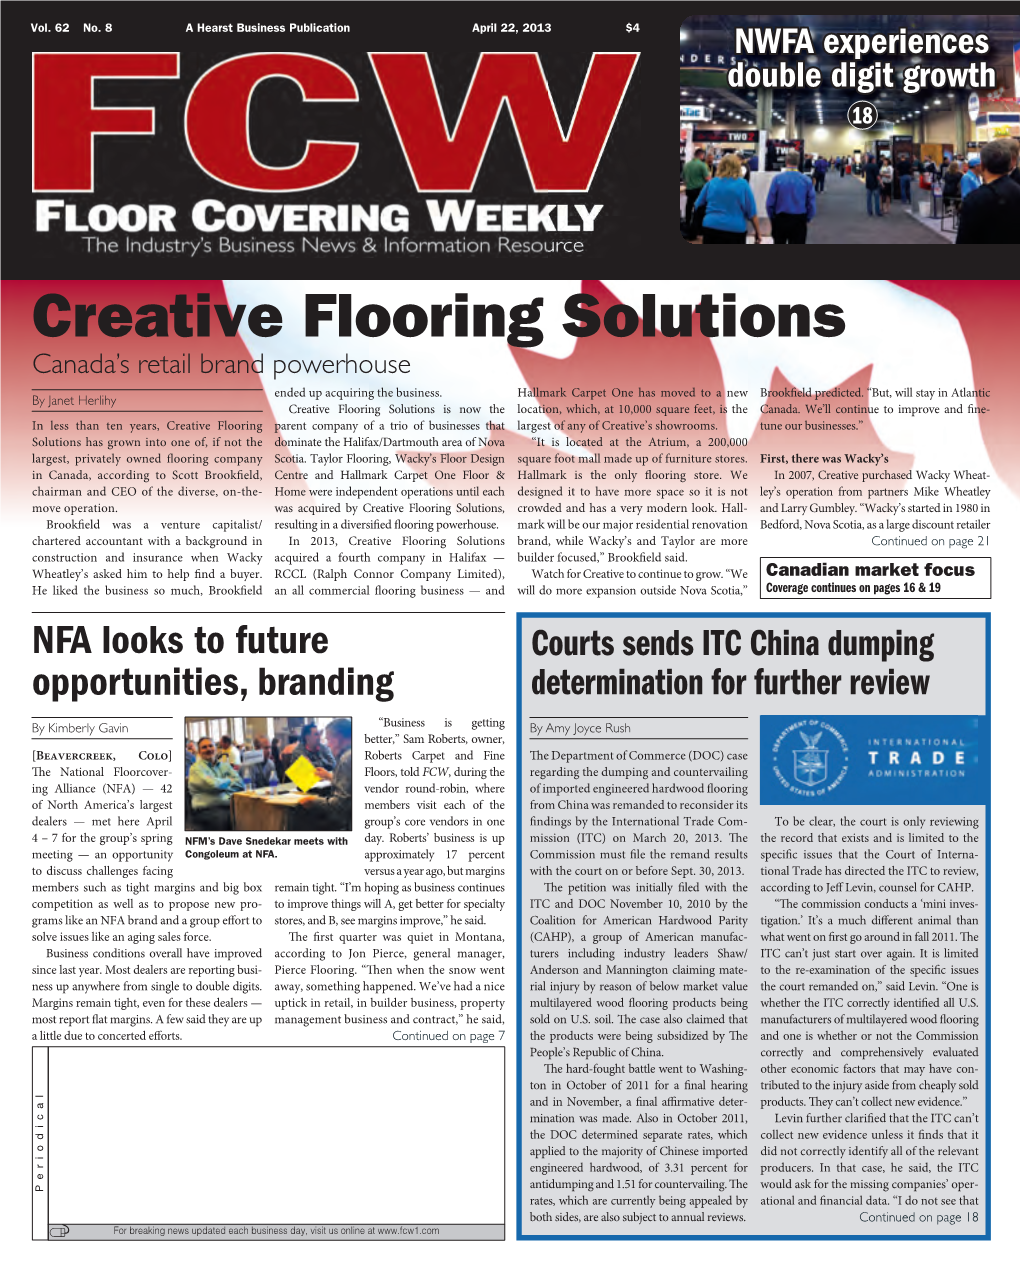 Creative Flooring Solutions Canada’S Retail Brand Powerhouse